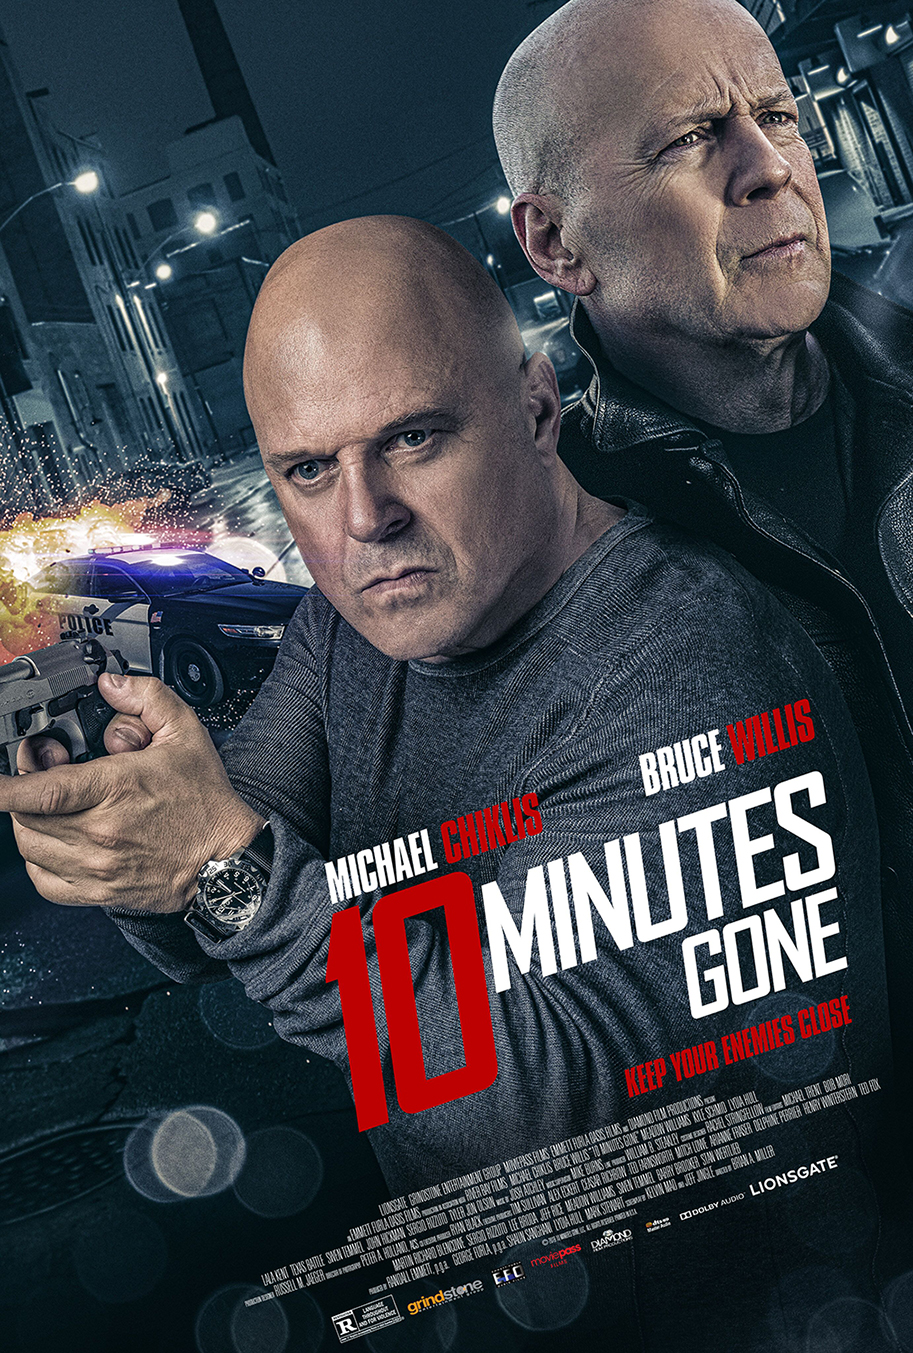 10 Minutes Gone, Bruce Willis, Michael Chiklis